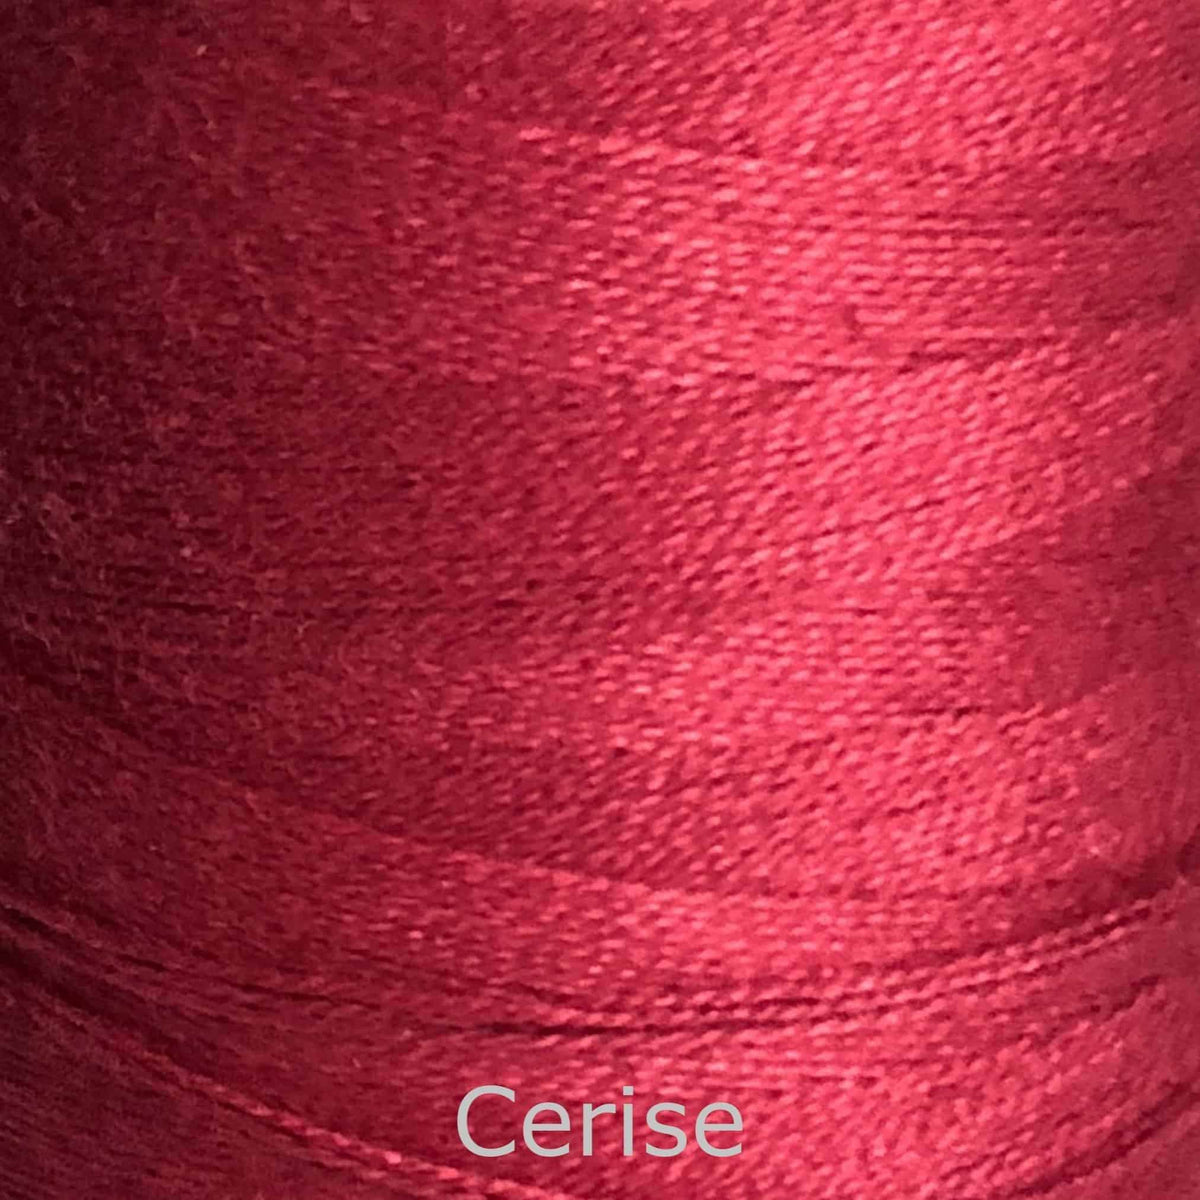 16/2 cotton weaving yarn cerise